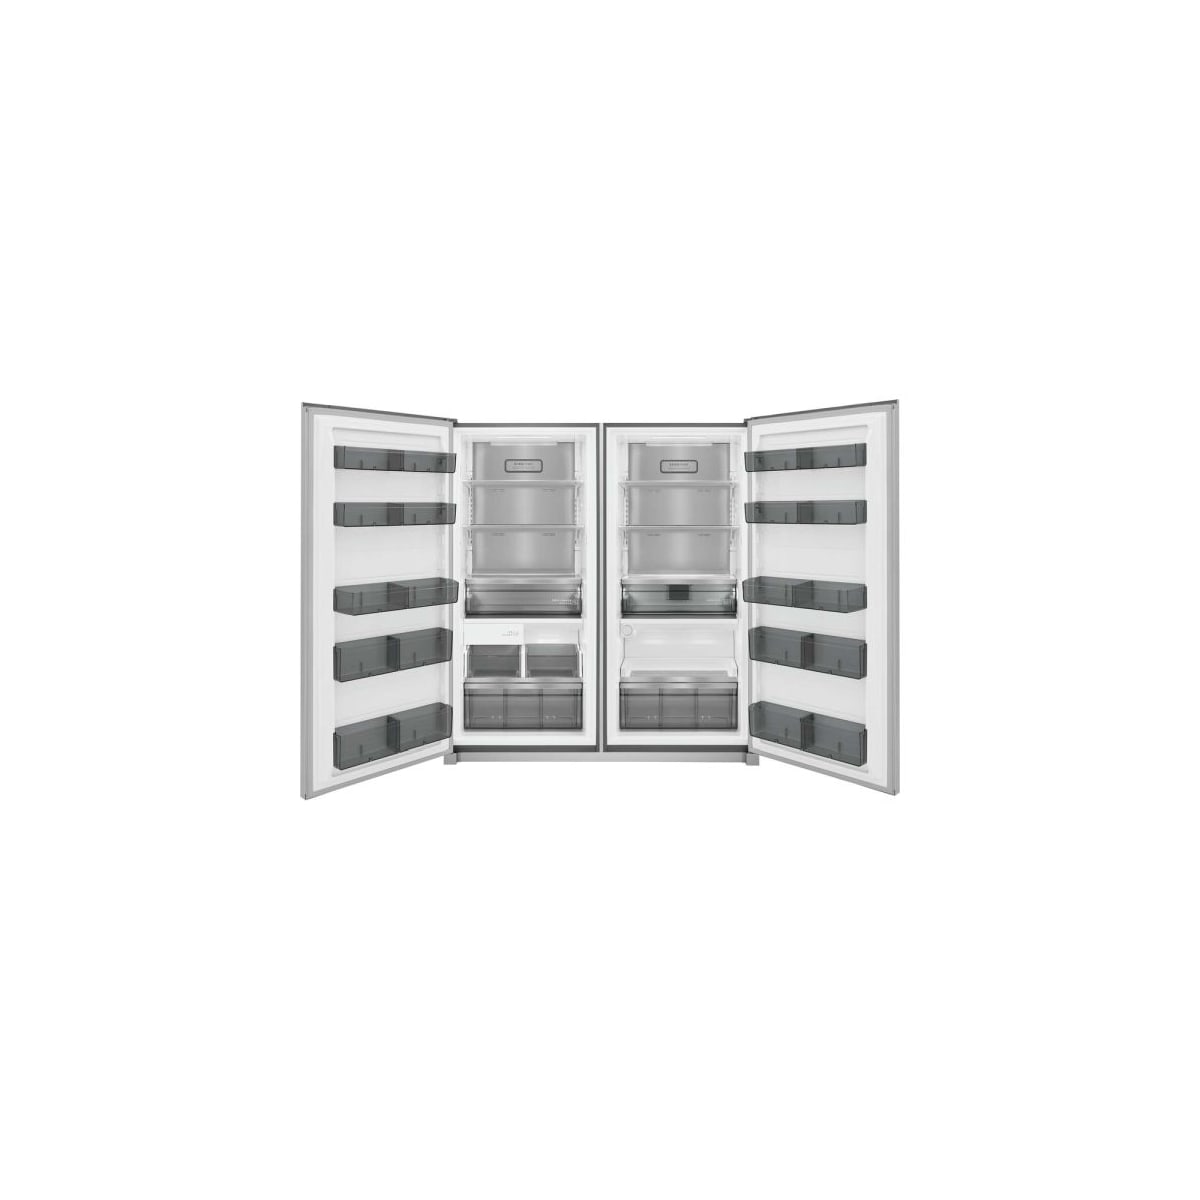 Frigidaire Professional FPRU19F8WF 19 cu. ft. All Refrigerator